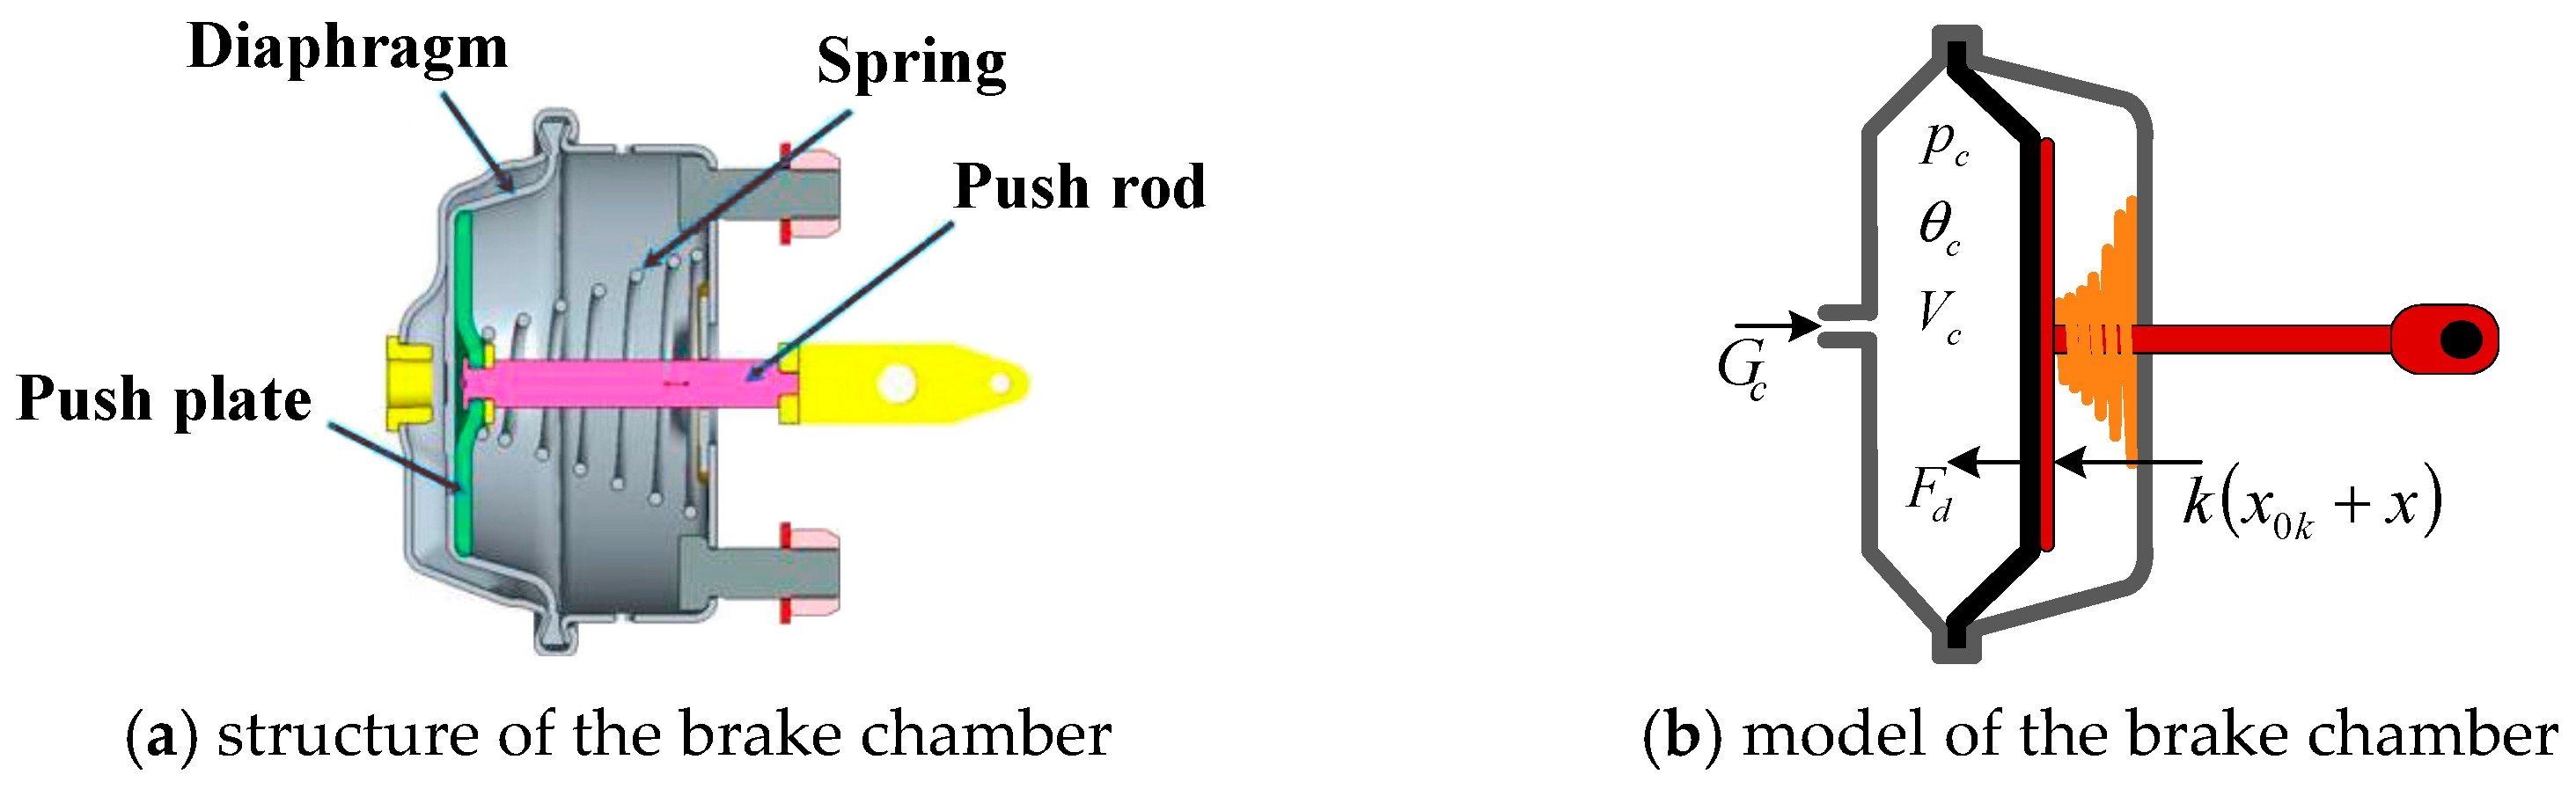 Brake Chamber Diagram Applied Sciences Free Full Text Of Brake Chamber Diagram